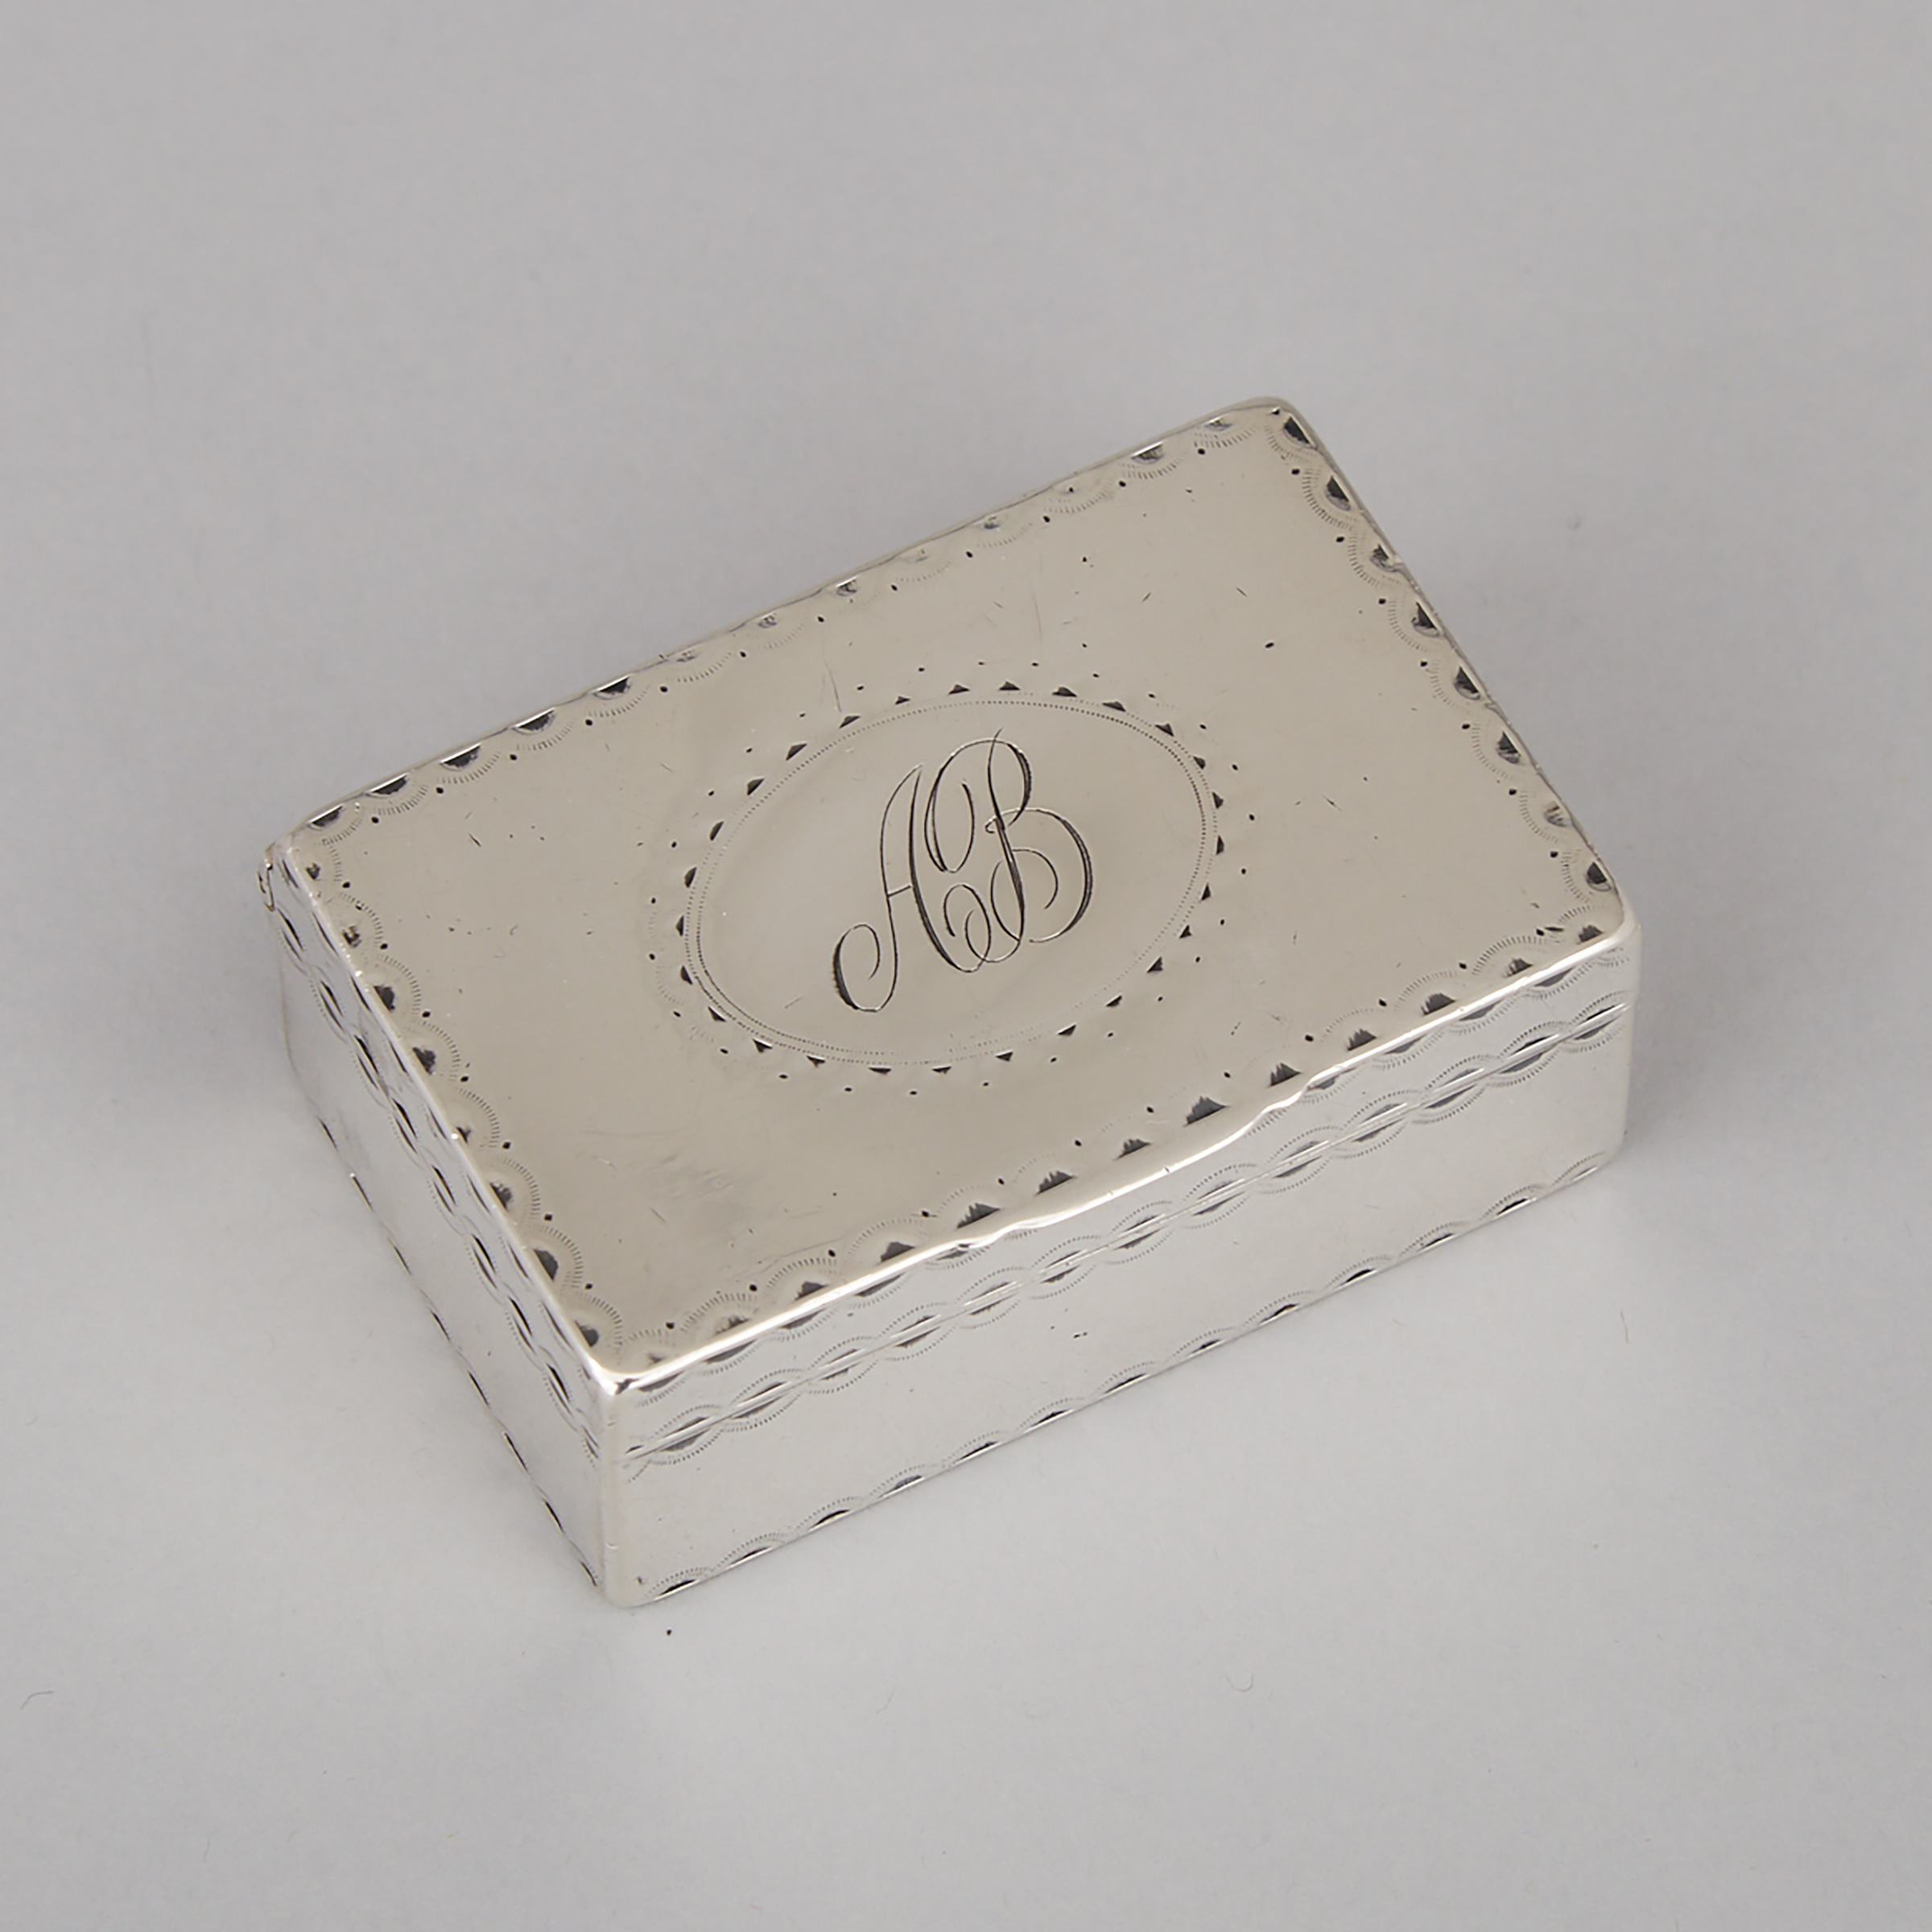 Canadian Silver Engraved Rectangular Snuff Box, Pierre Huguet dit Latour, c.1800